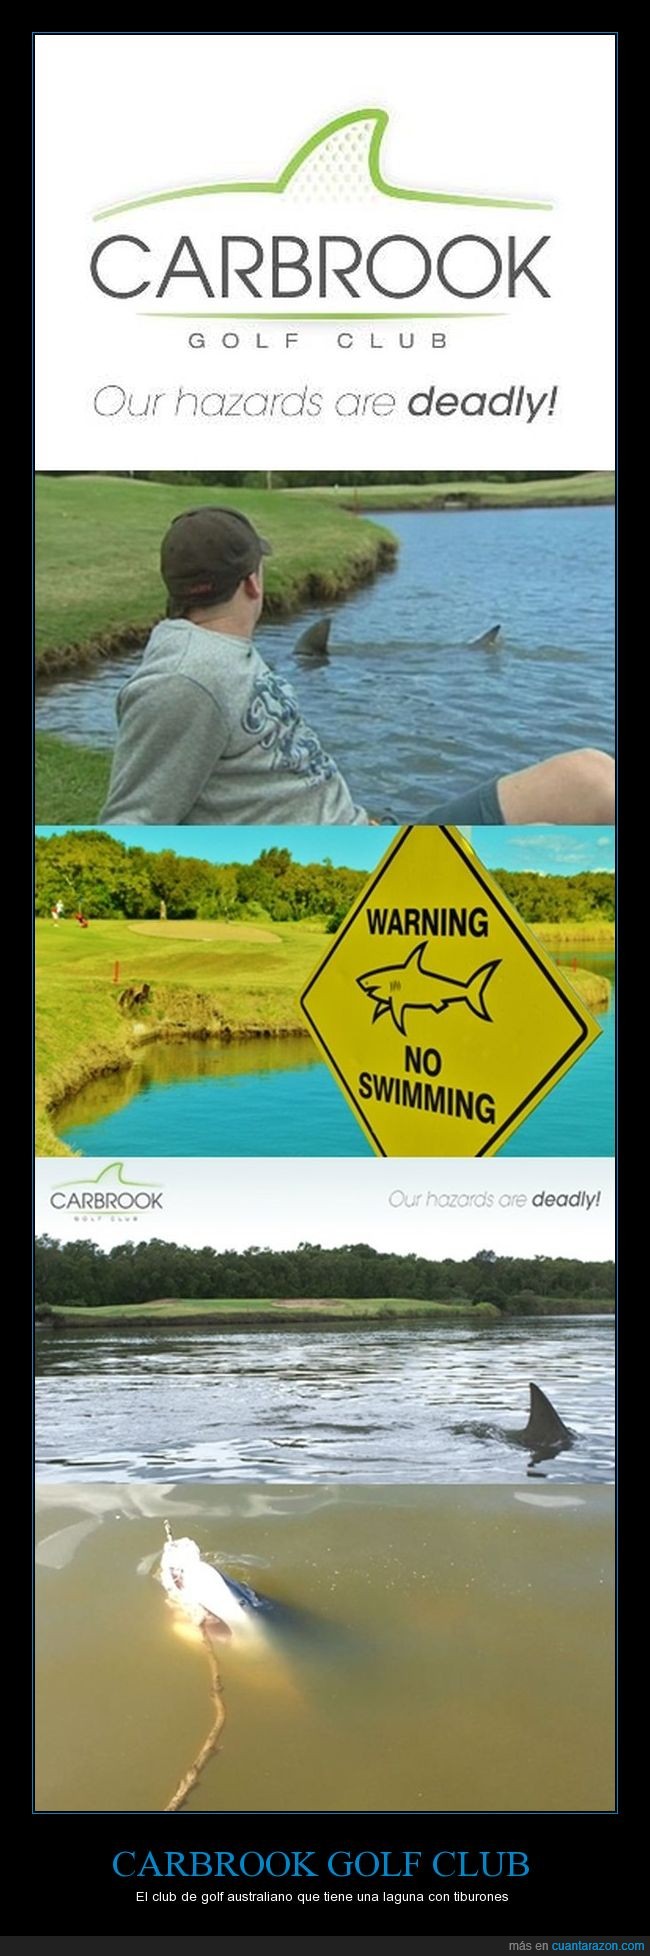 Carbrook Golf Club,golf,laguna,tiburones,nadie va a por las pelotas que caen al agua,tiburón toro,Australia